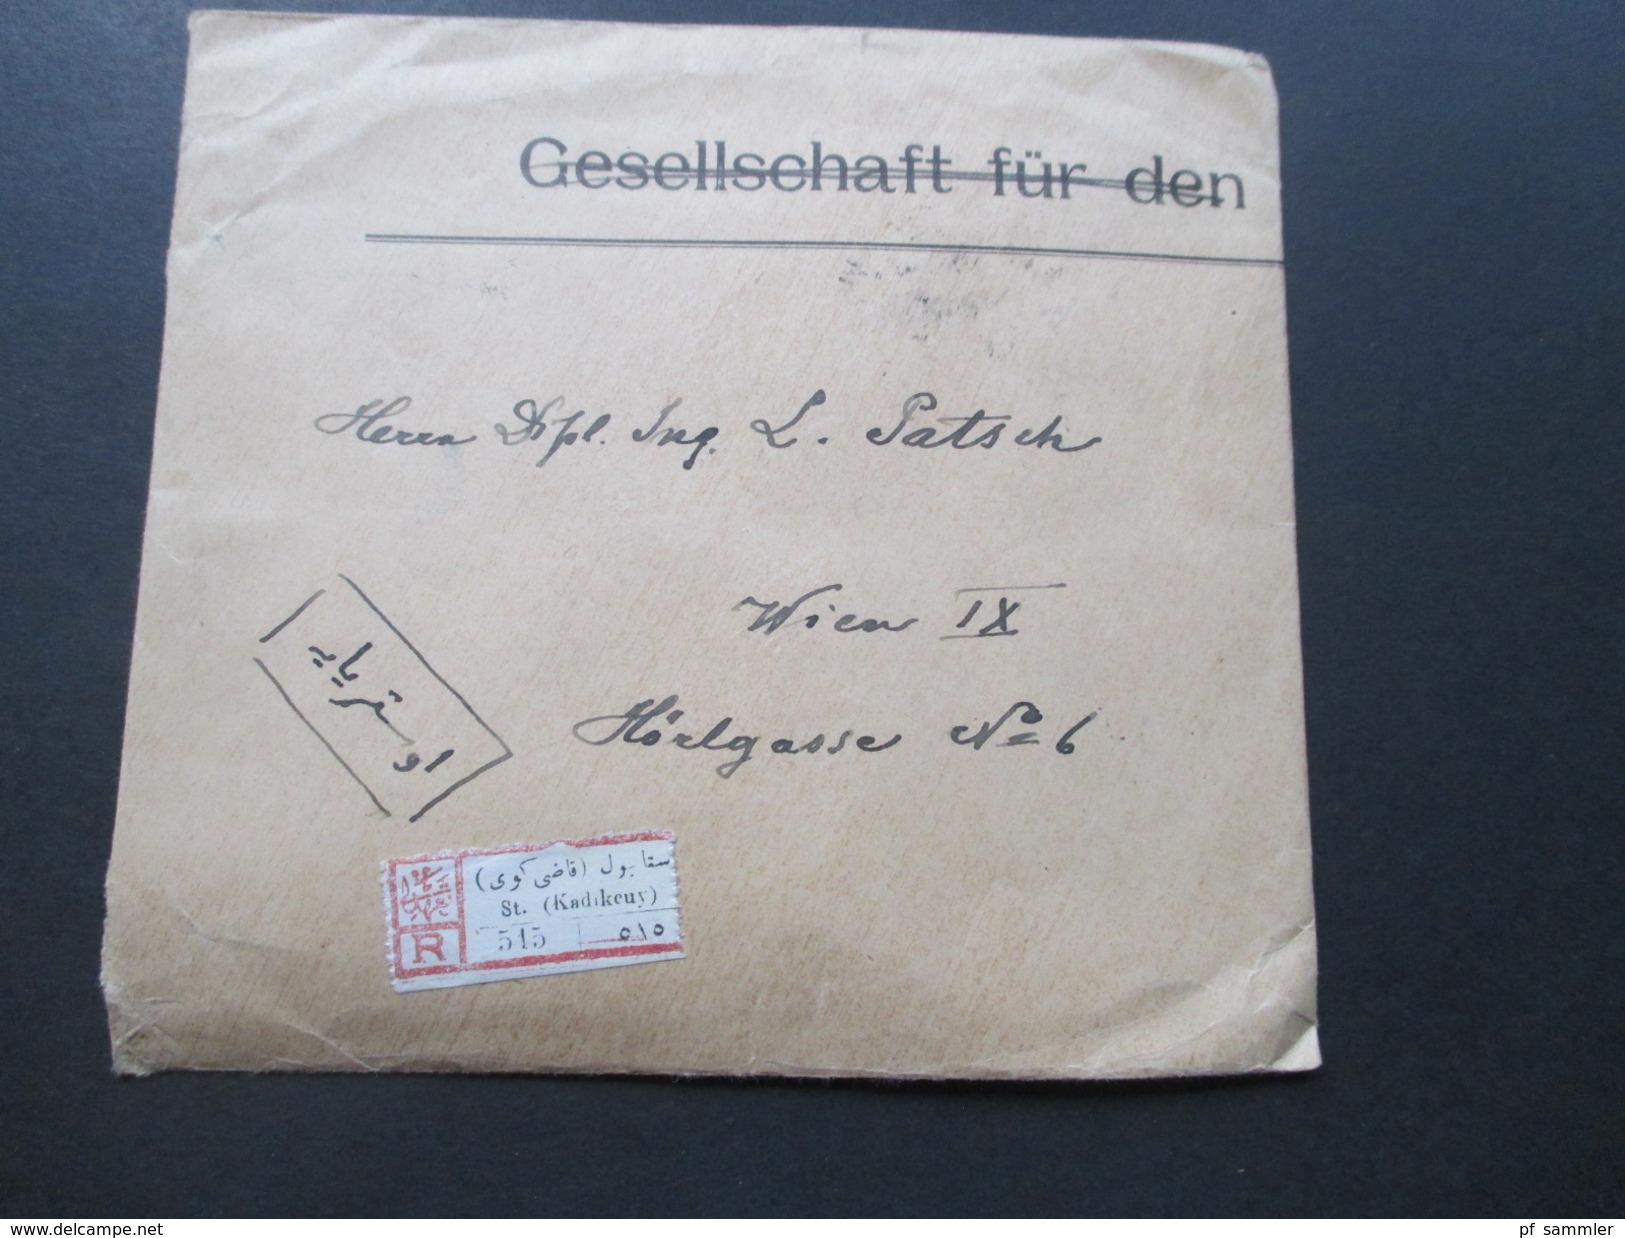 Türkei 1928 R-Brief R-Zettel St. Kadikeuy 515 / Kadikoy! Nr. 875 Smyrna Aufdruck MiF. RRR?!? Nach Wien! - Lettres & Documents